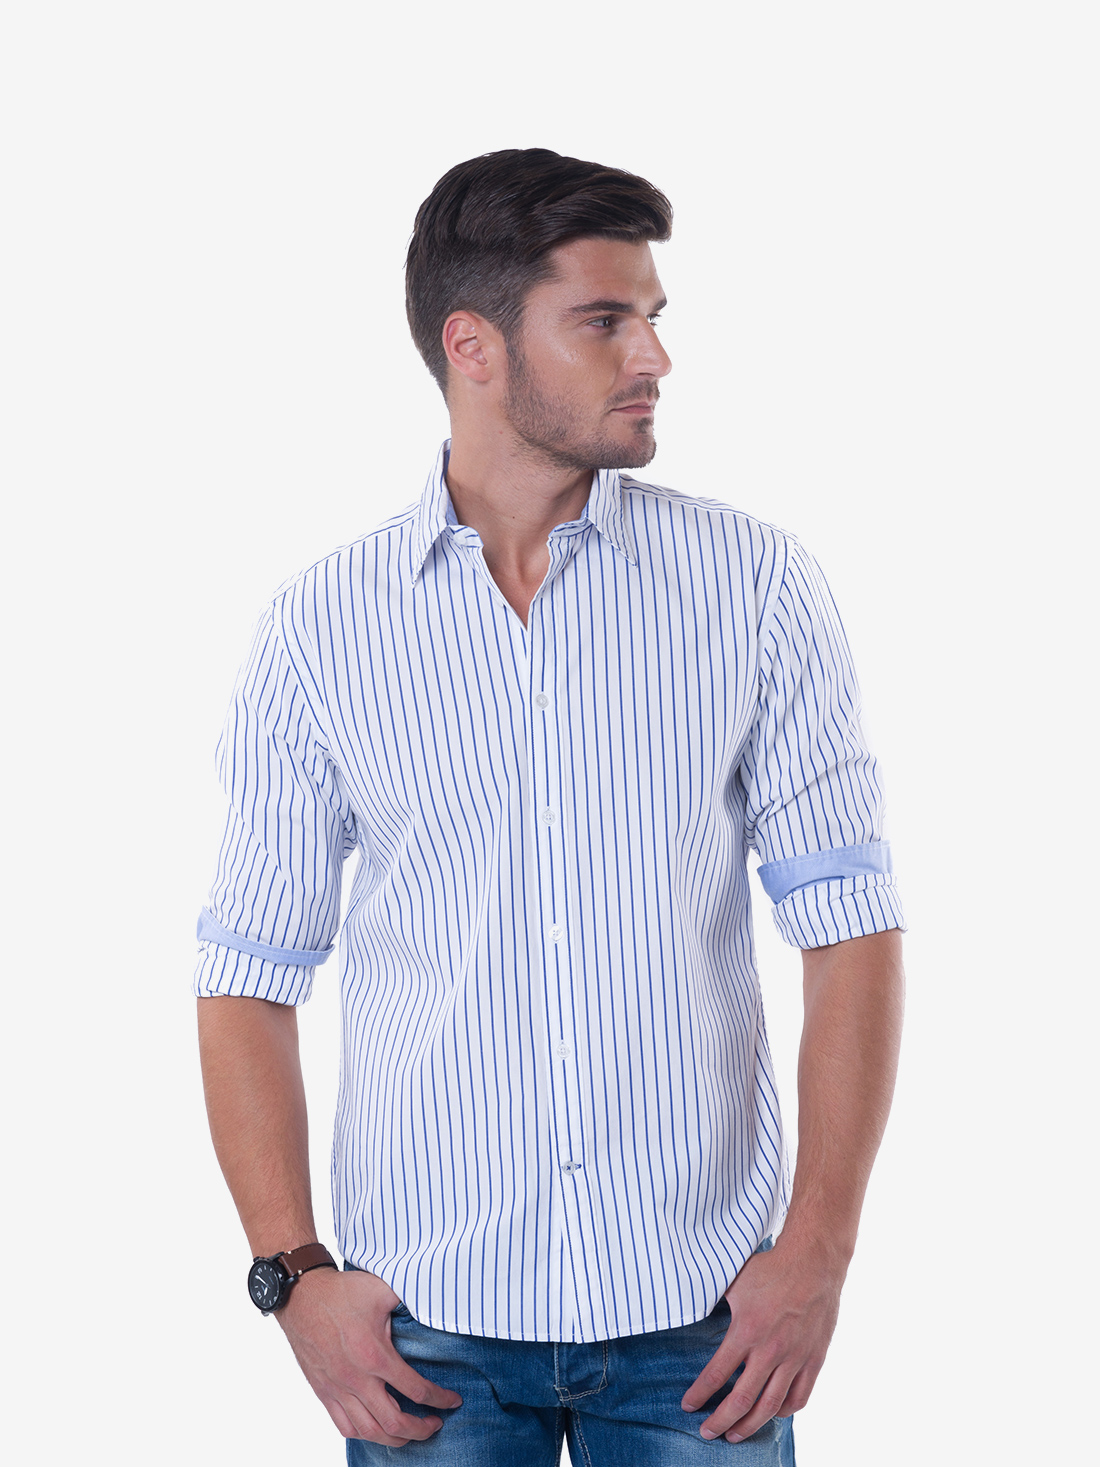 Tailored White & Blue Pencil Stripe Cotton Shirt - Kal Jacobs